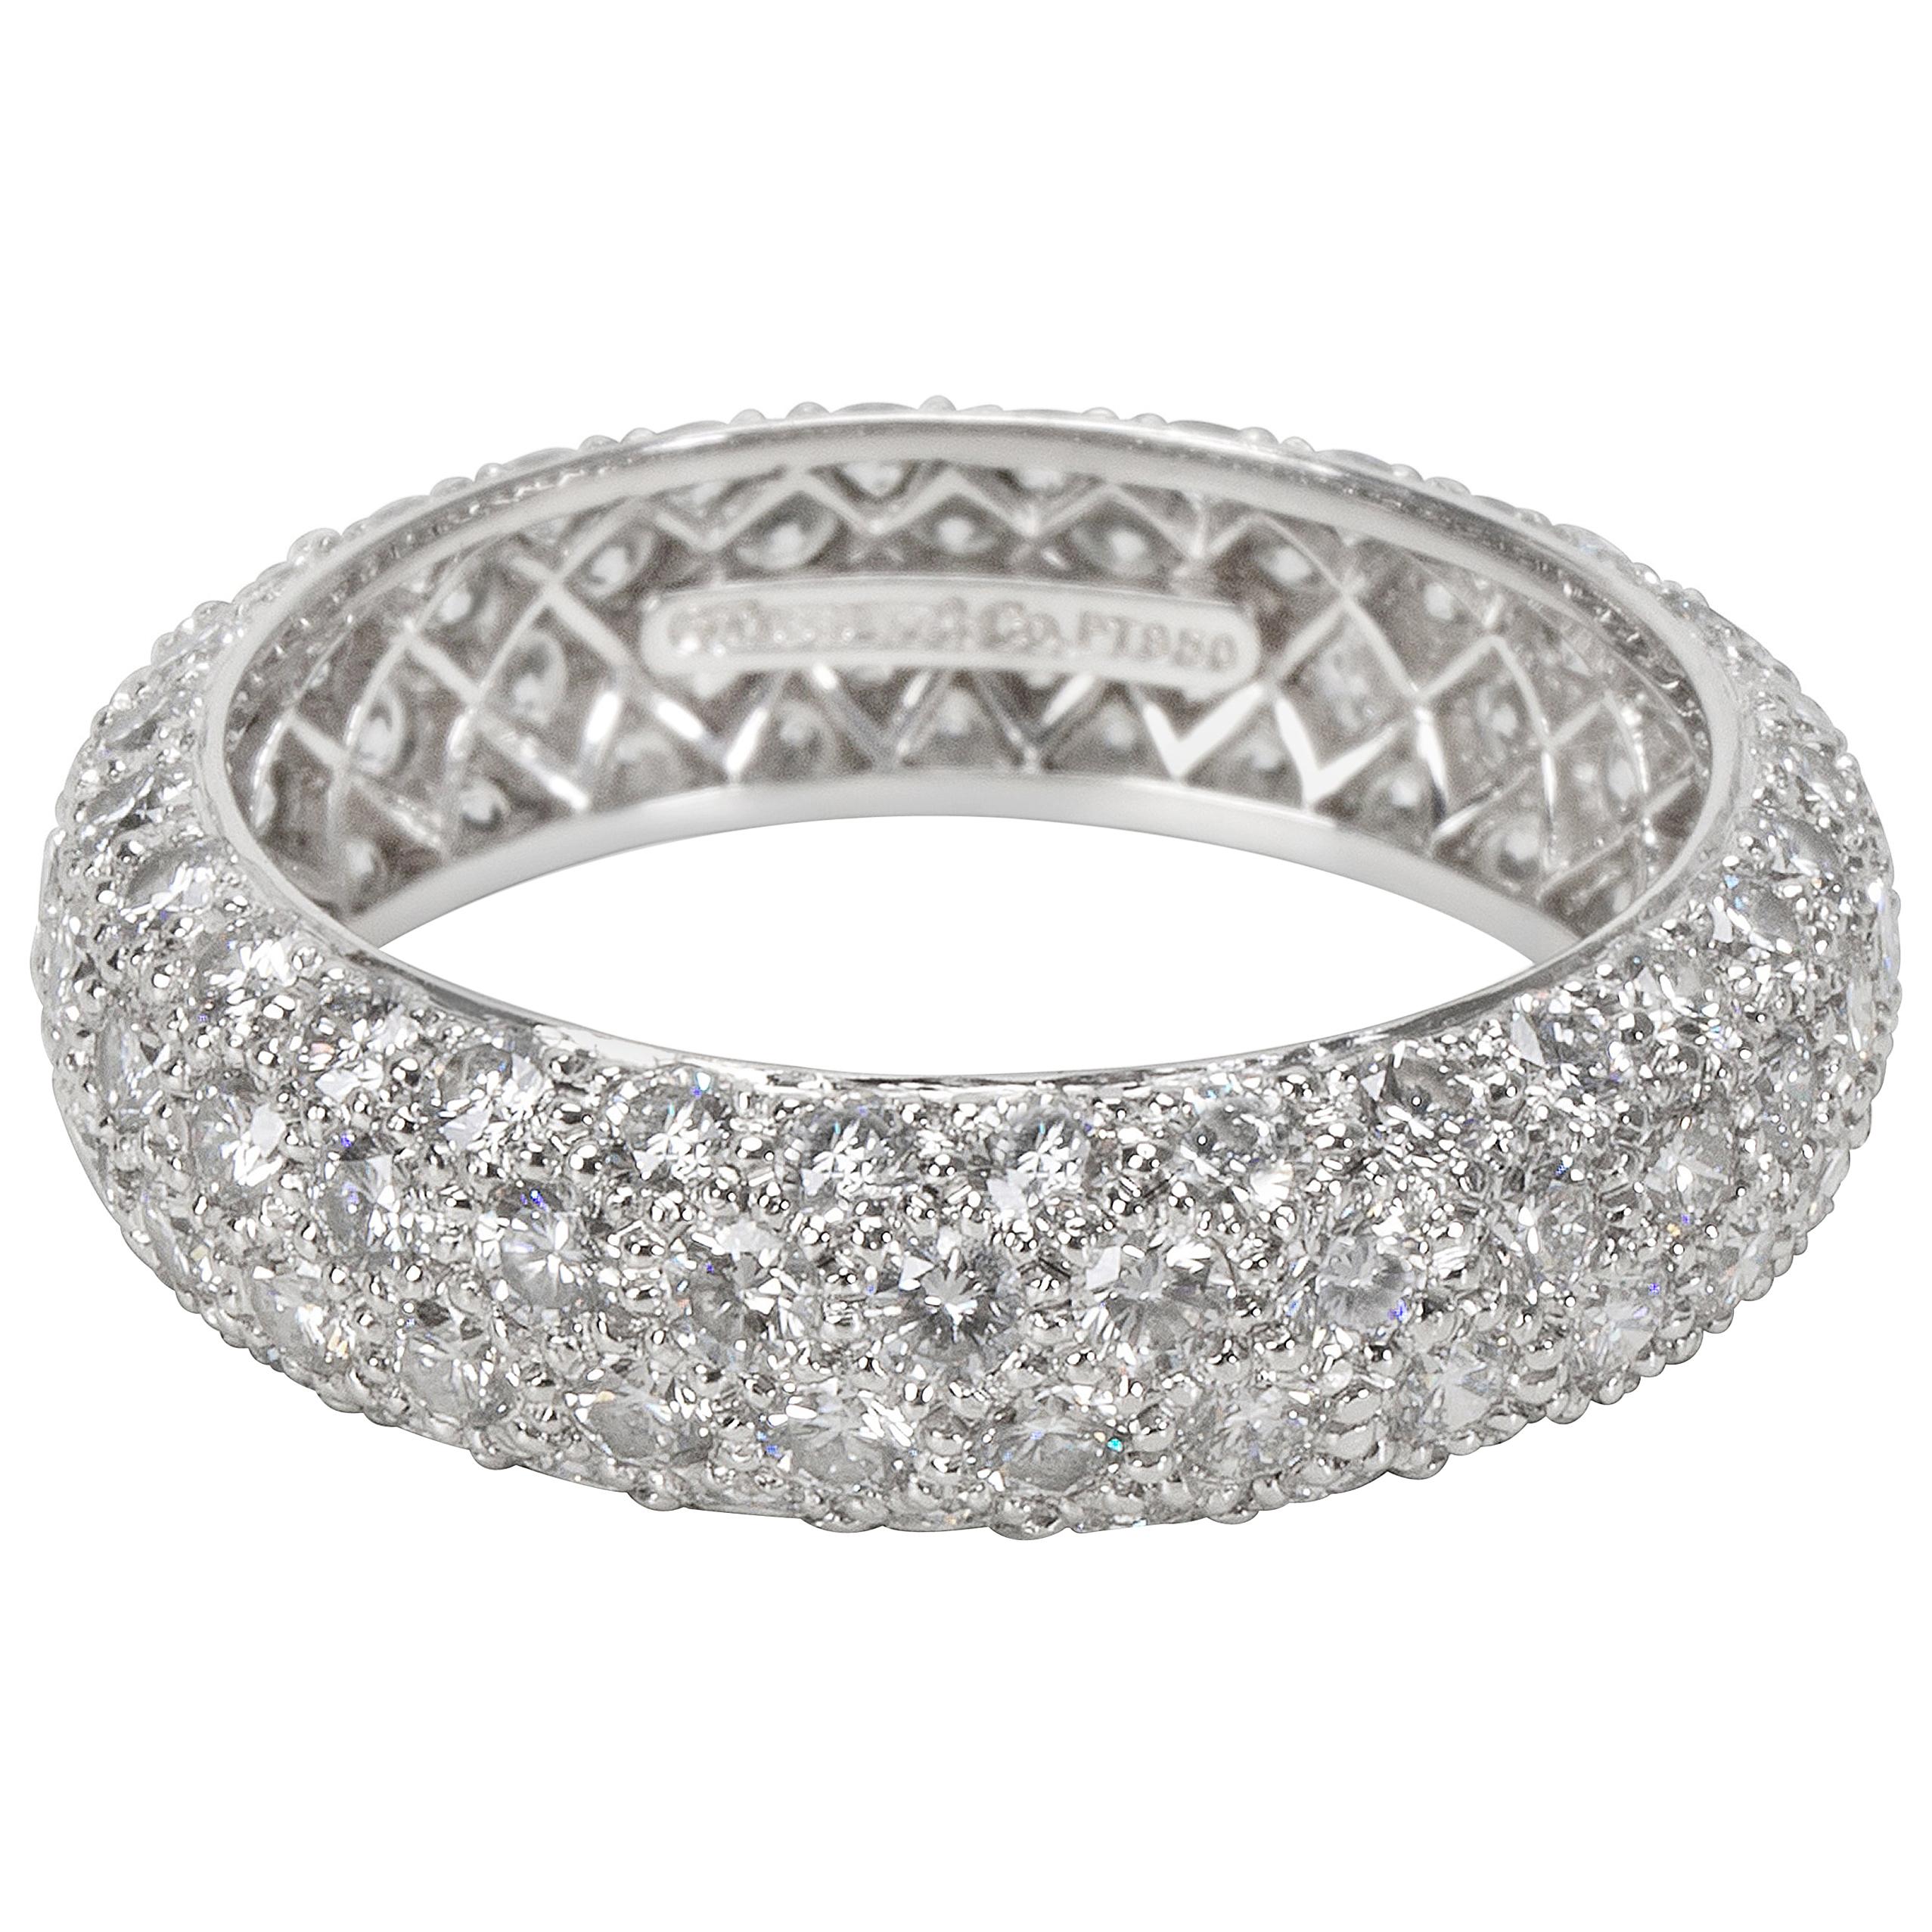 Tiffany & Co. Etoile 4 Rows Pave Diamond Ring in Platinum 2.90 Carat